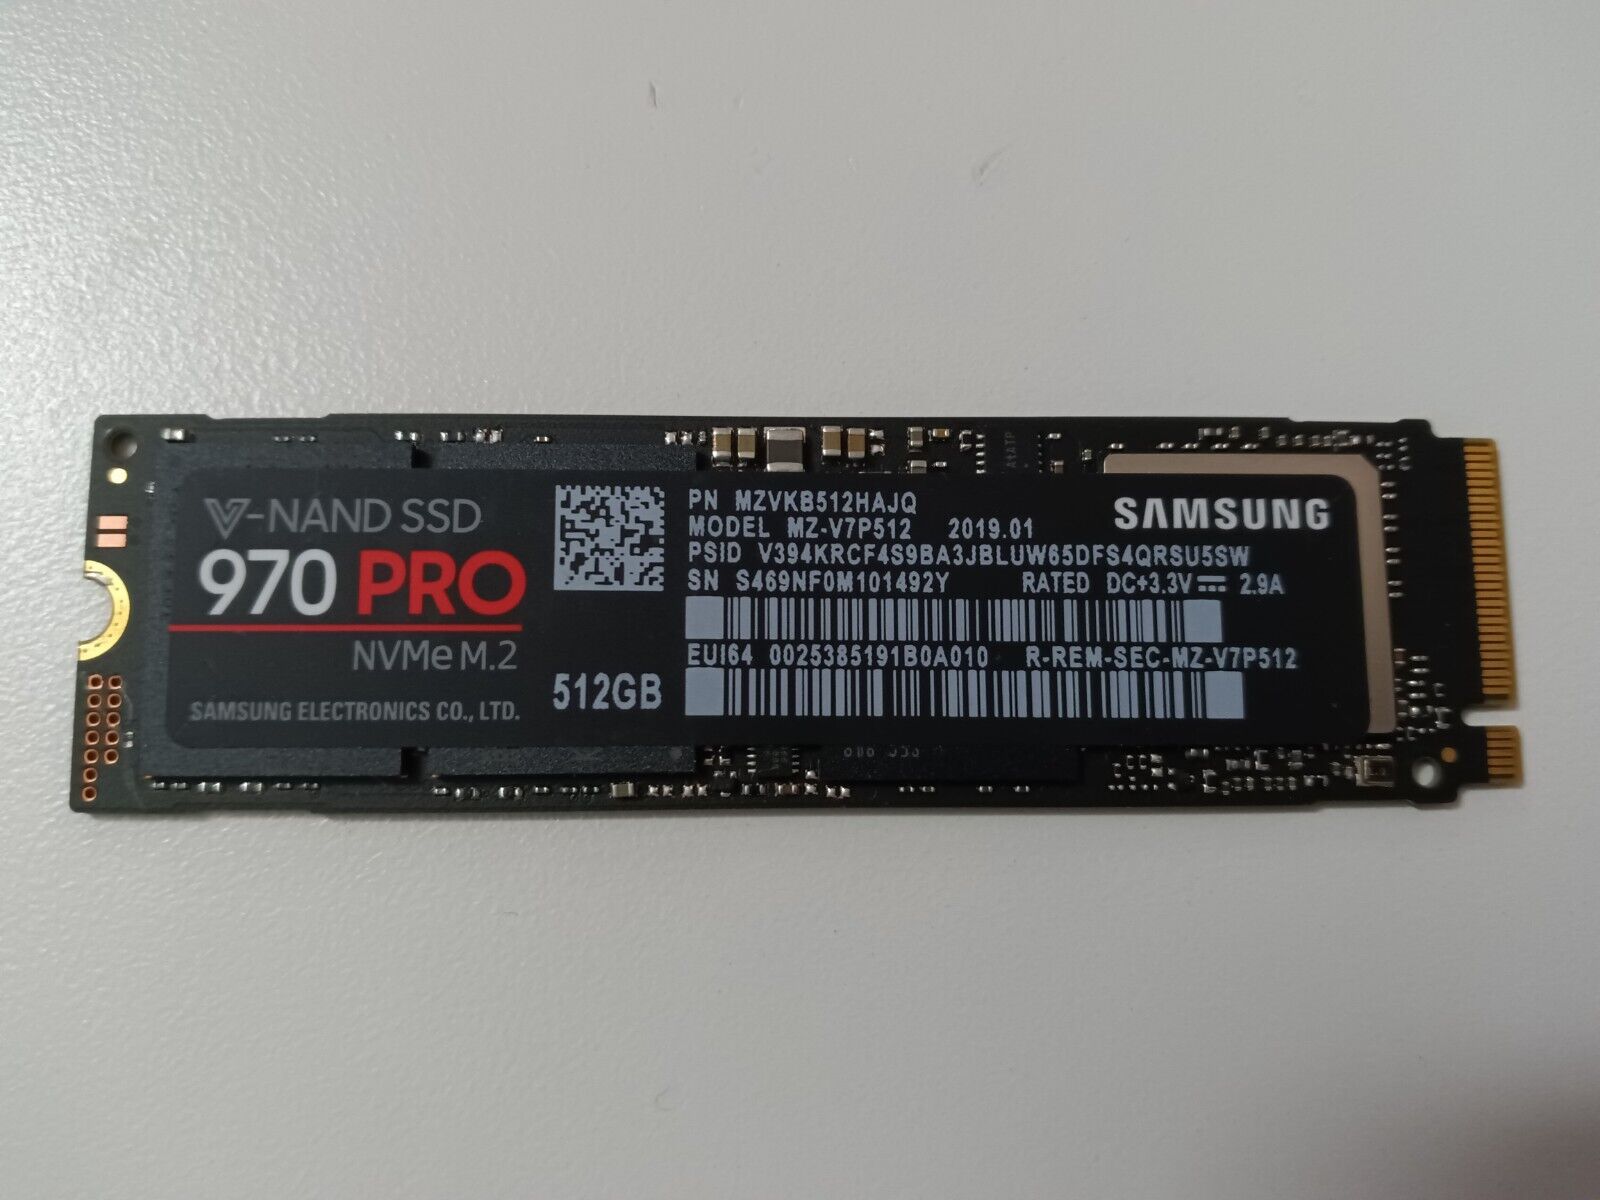 Samsung 970 PRO 512GB,Internal,NVMe M.2 (MZ-V7P512BW) Solid State Drive